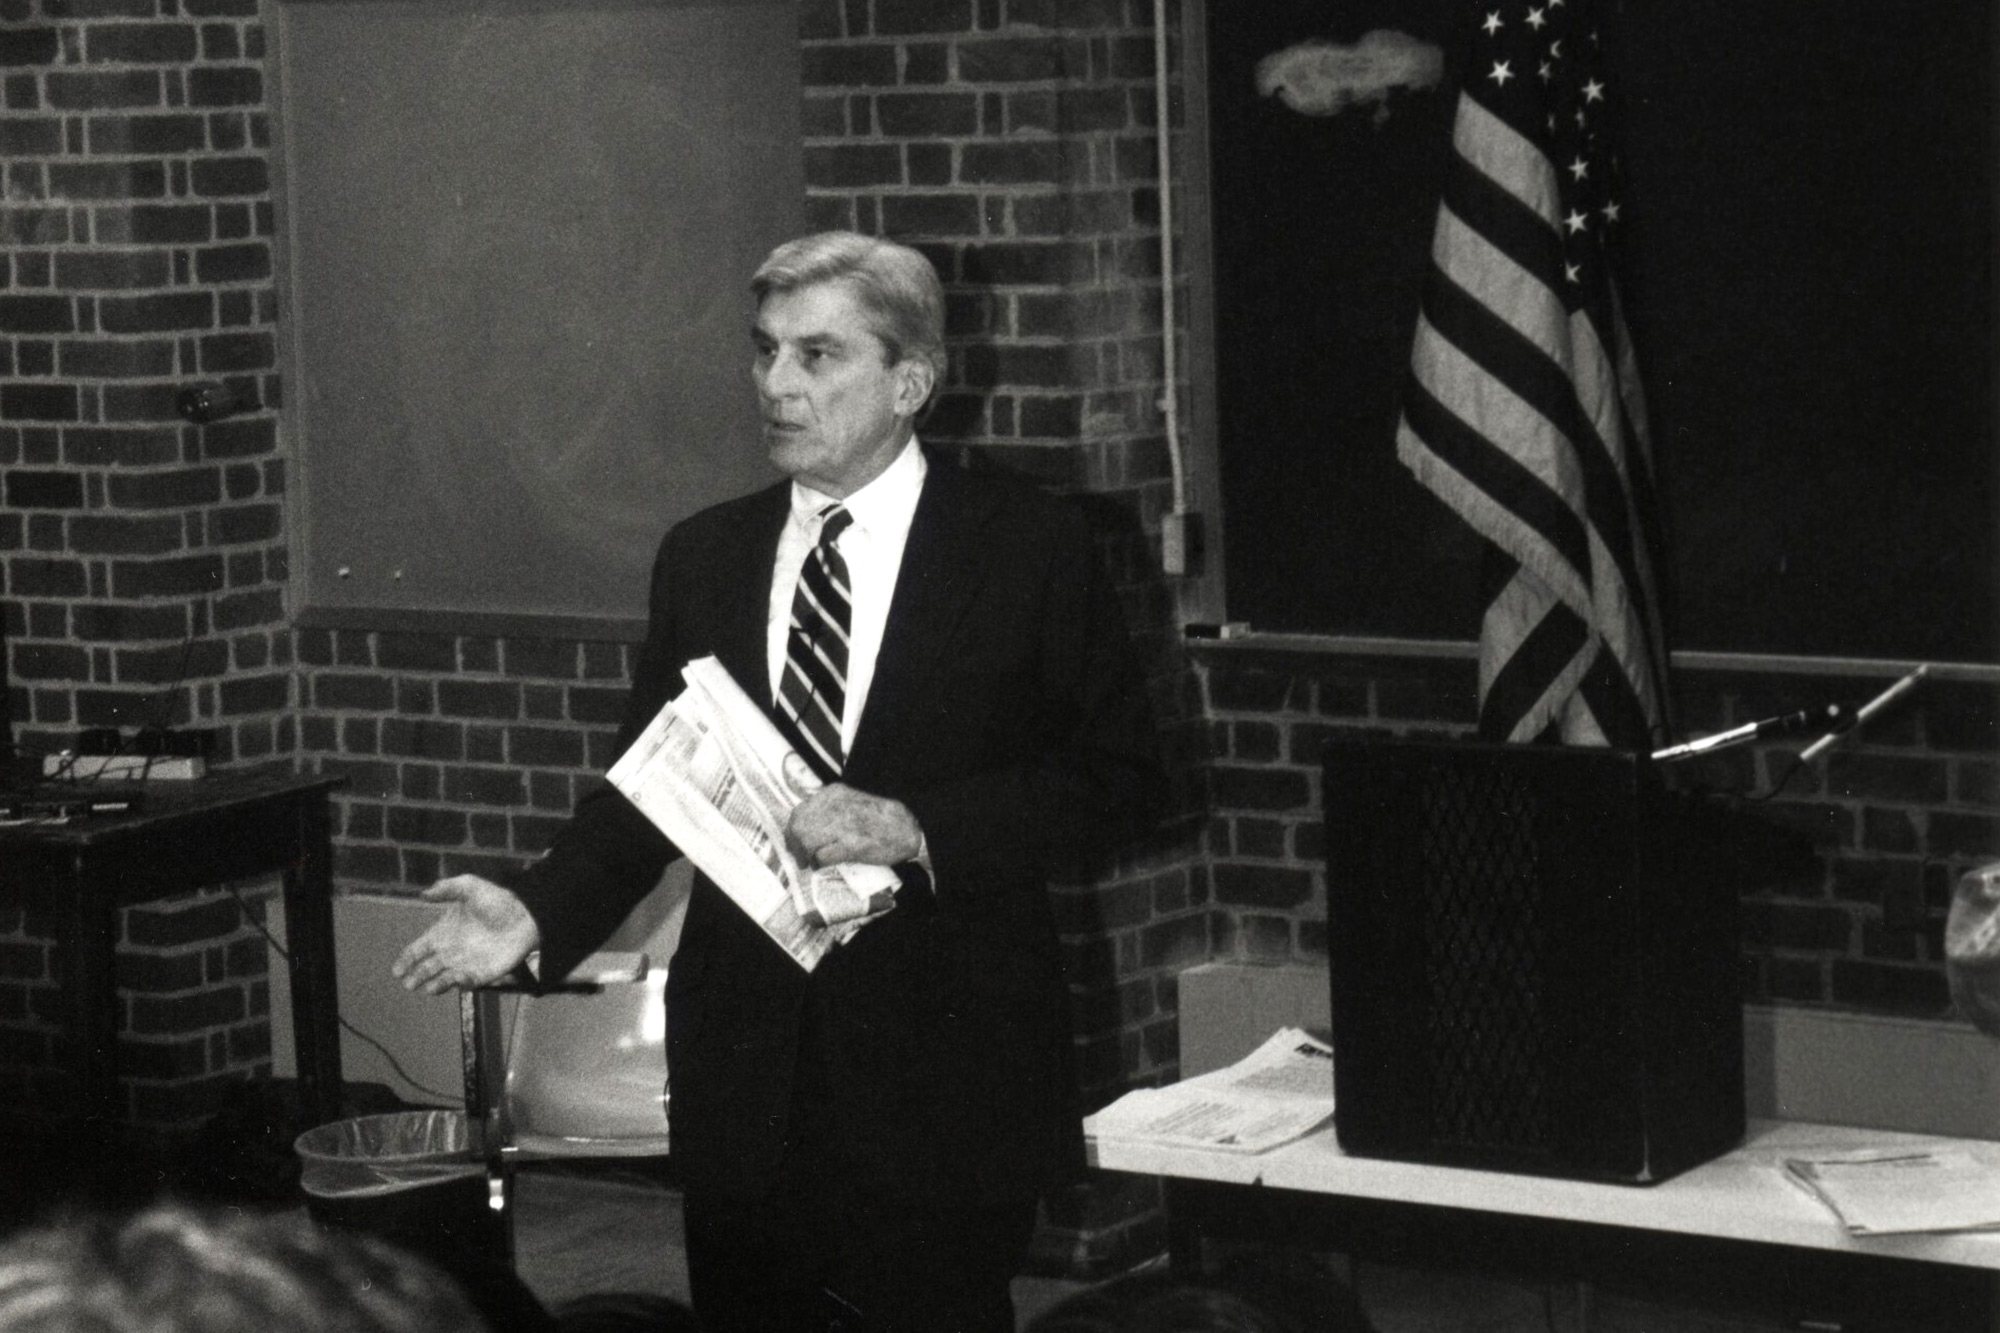 Former U.S. Sen. John W. Warner speaking to a class, black and white image